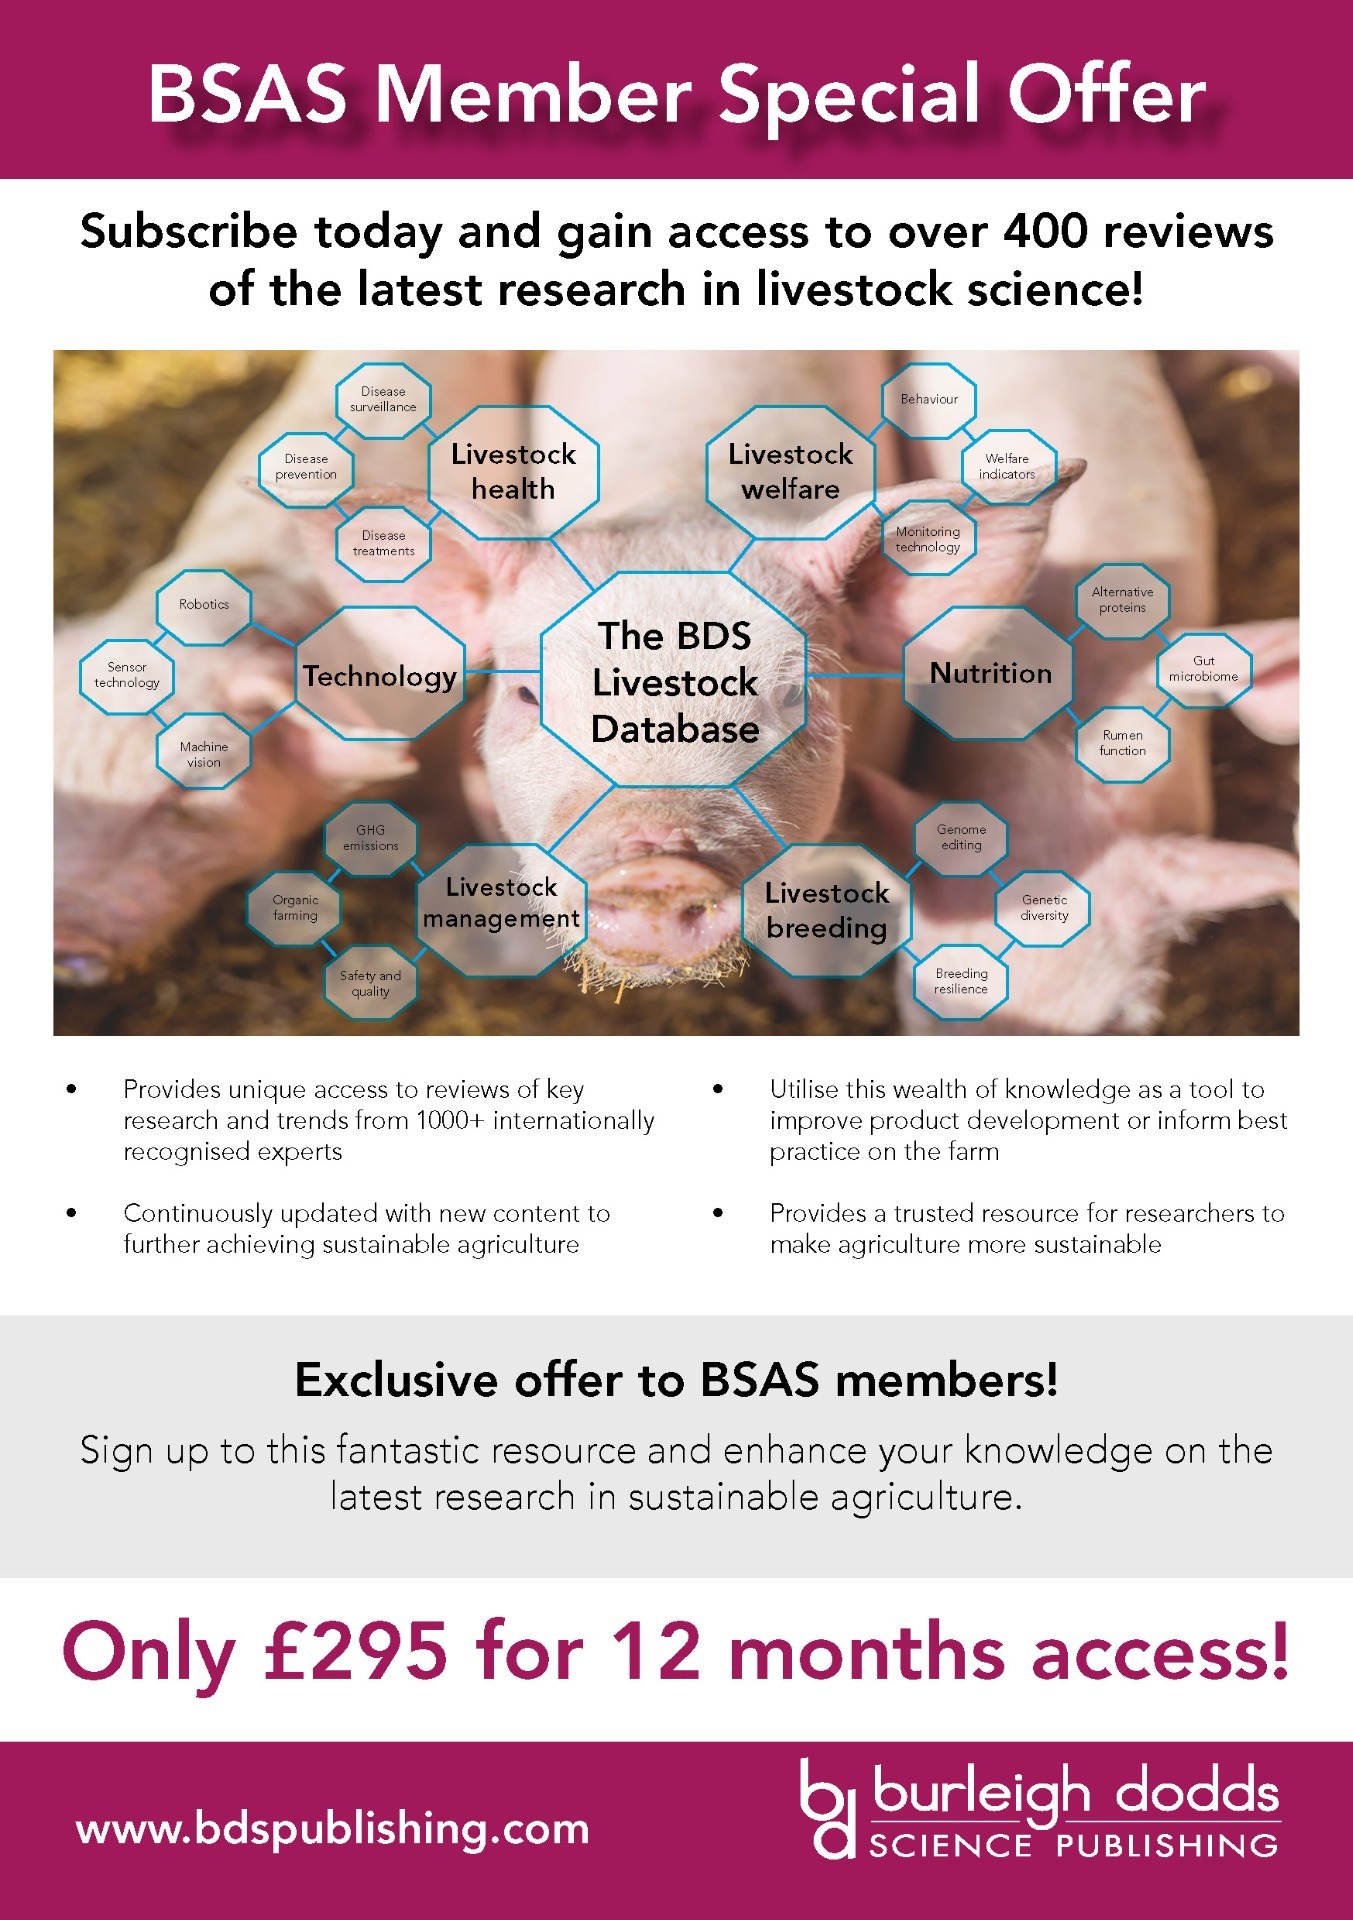 BSAS Member Special Offer Flyer